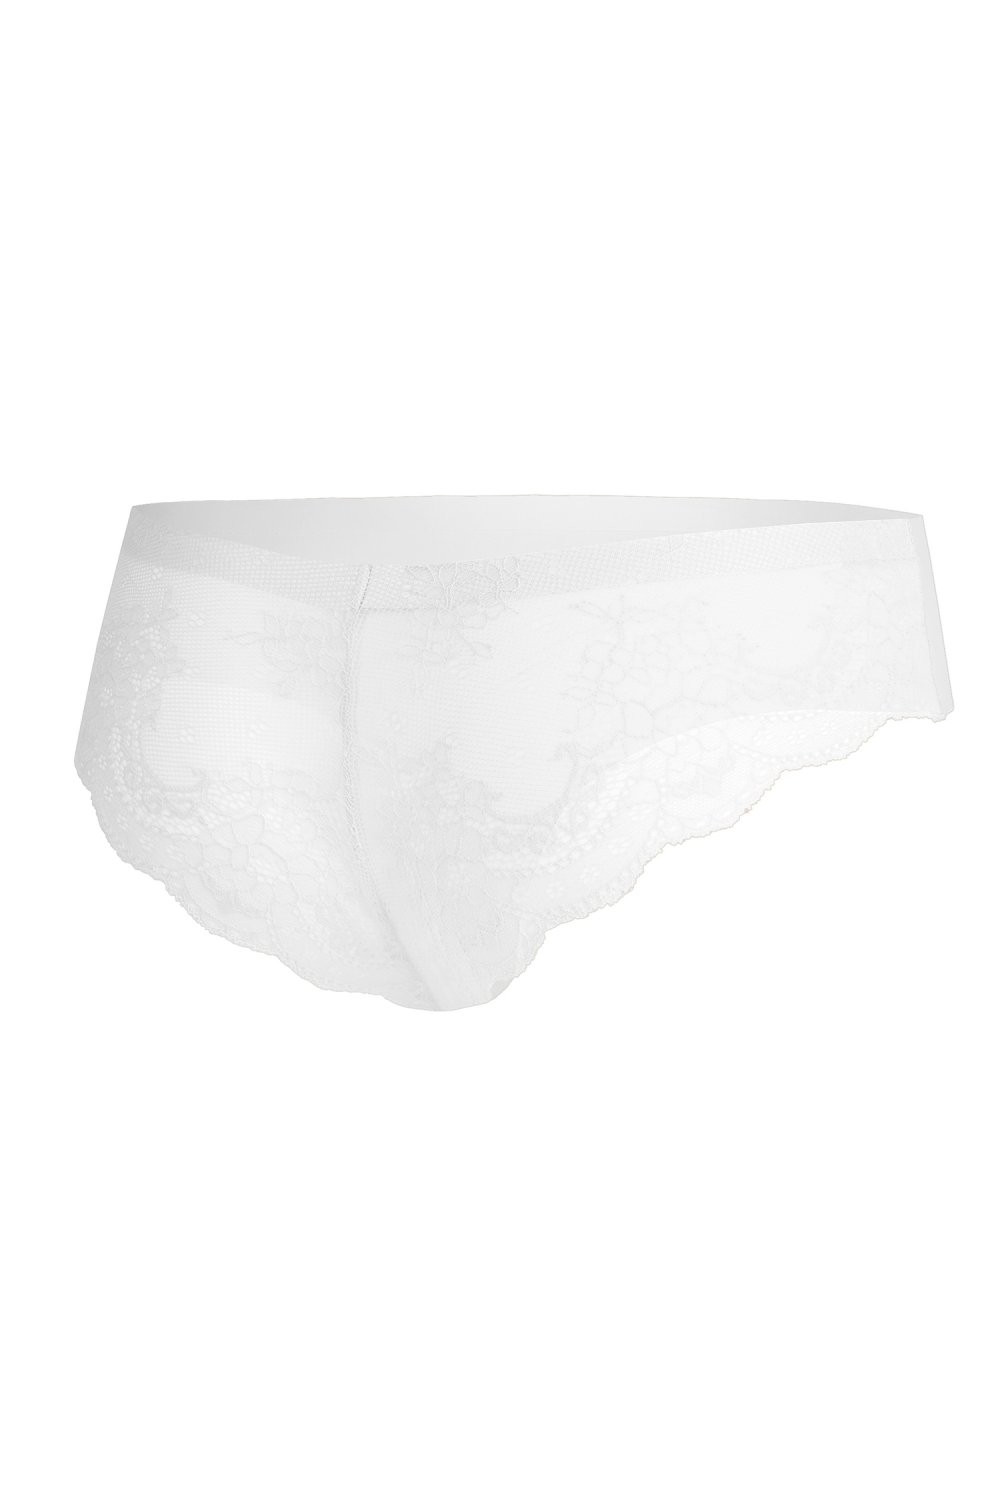 Dámské kalhotky Tanga white - JULIMEX Bílá S